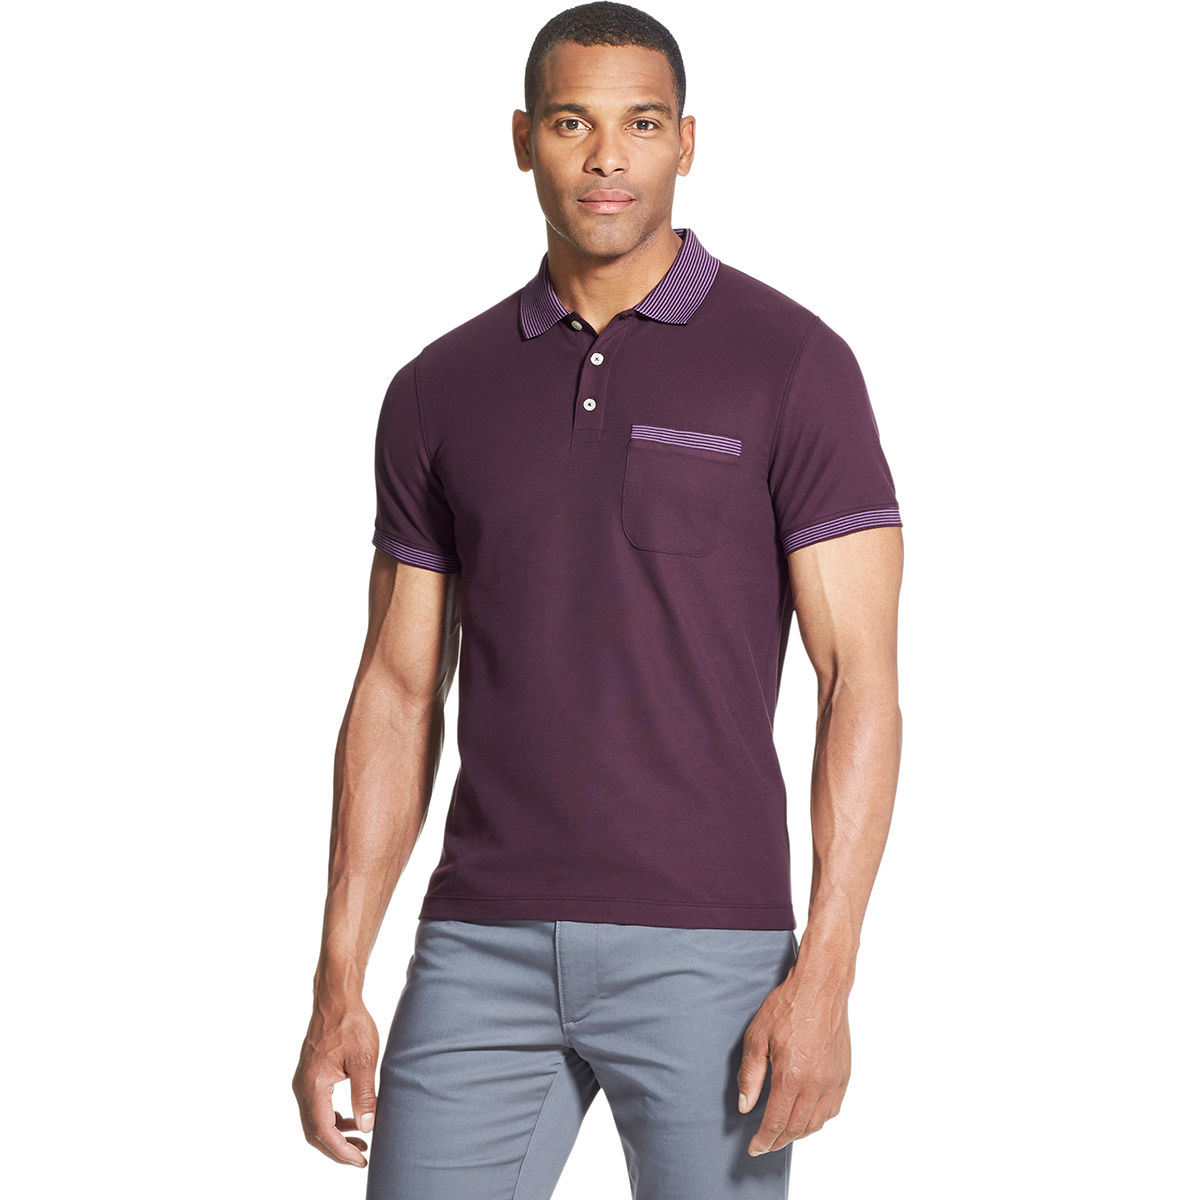 Van Heusen Men's Never Tuck Polo Shirt - Purple, XL